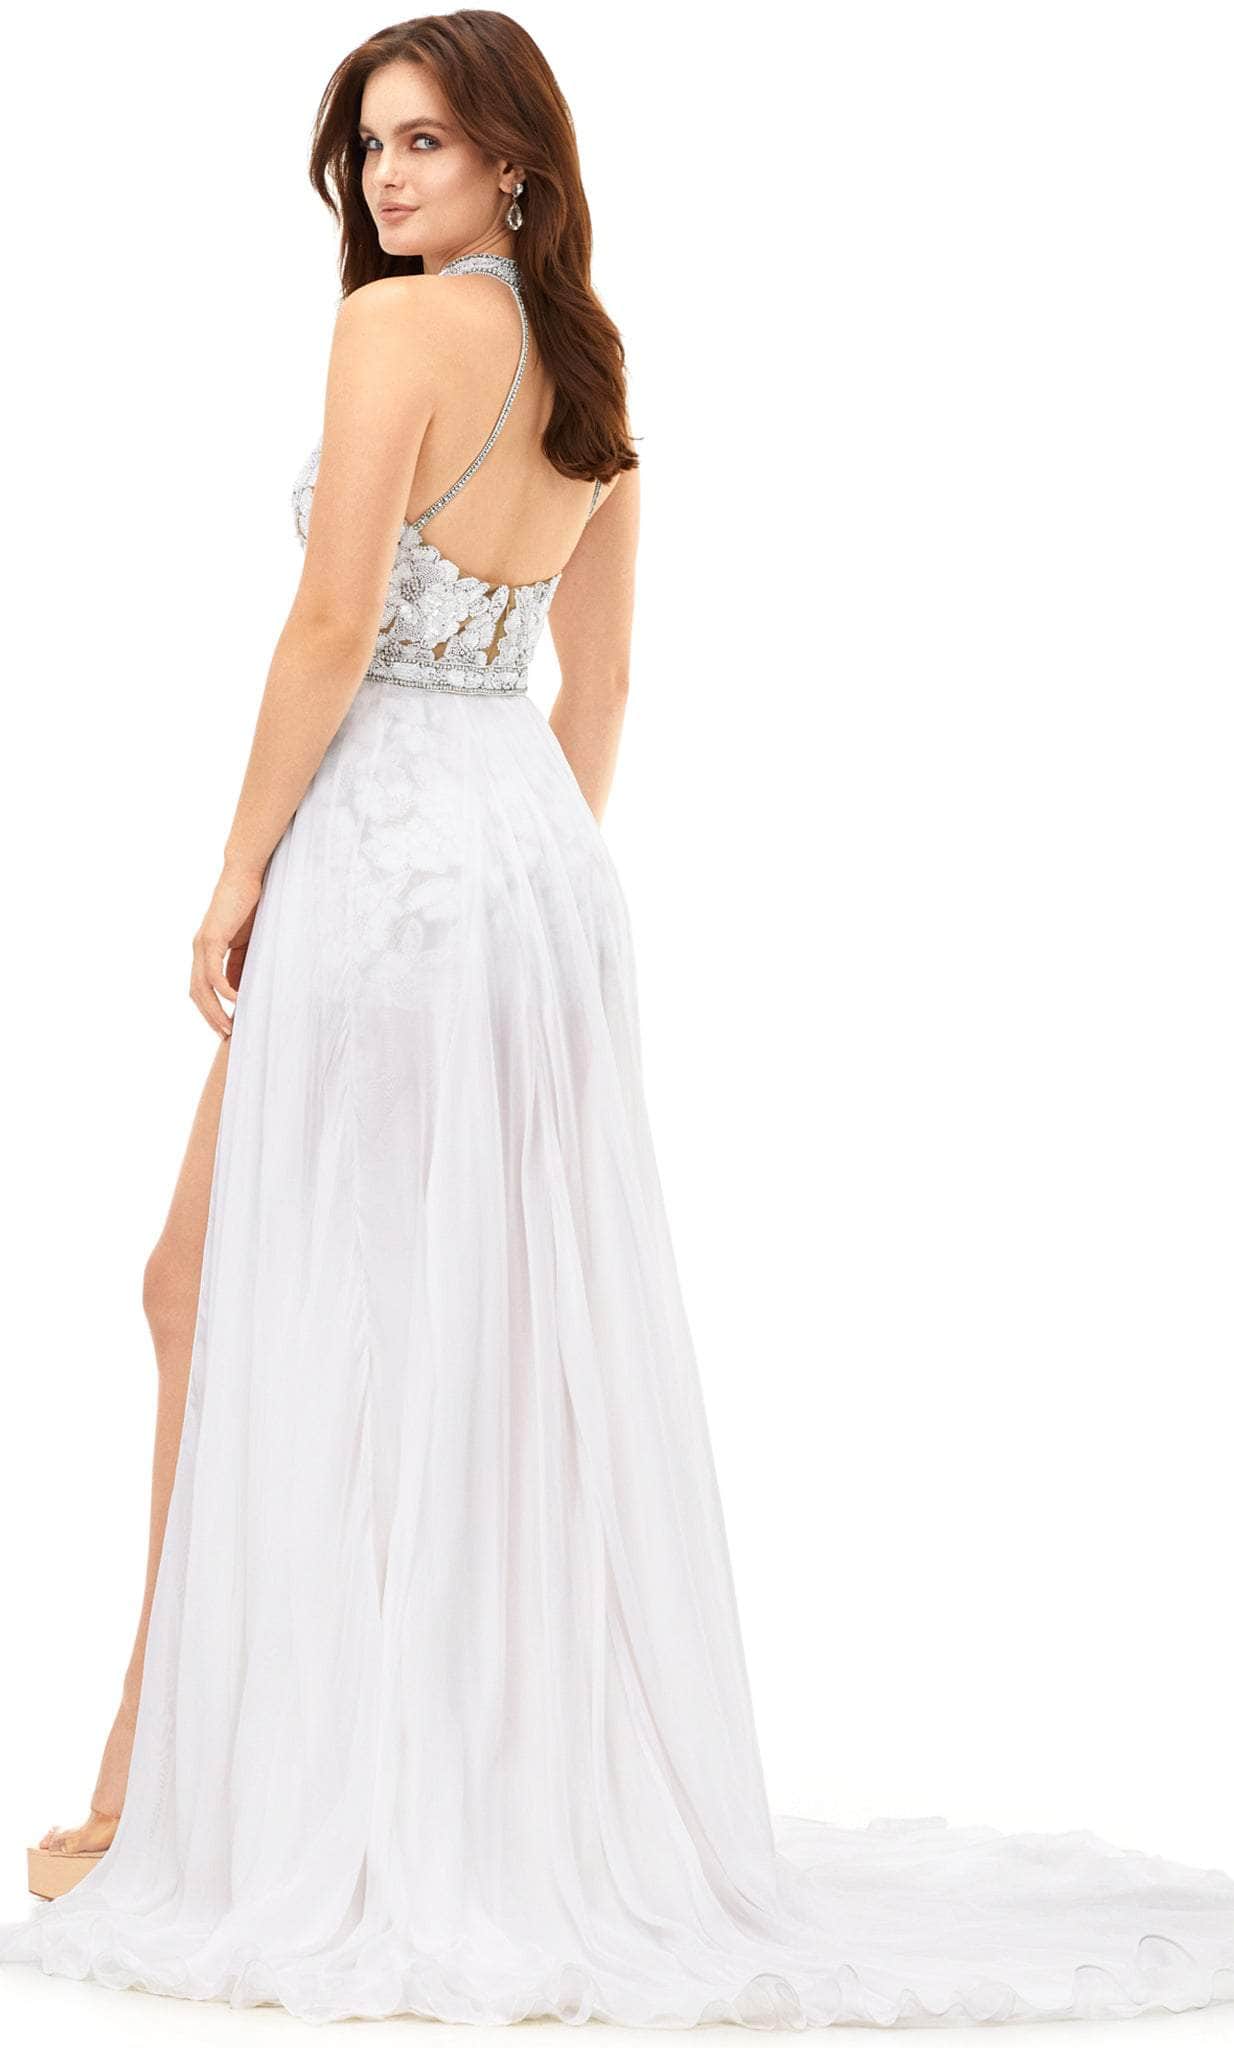 Ashley Lauren 11354 - Beaded Halter Romper With Overskirt Special Occasion Dress